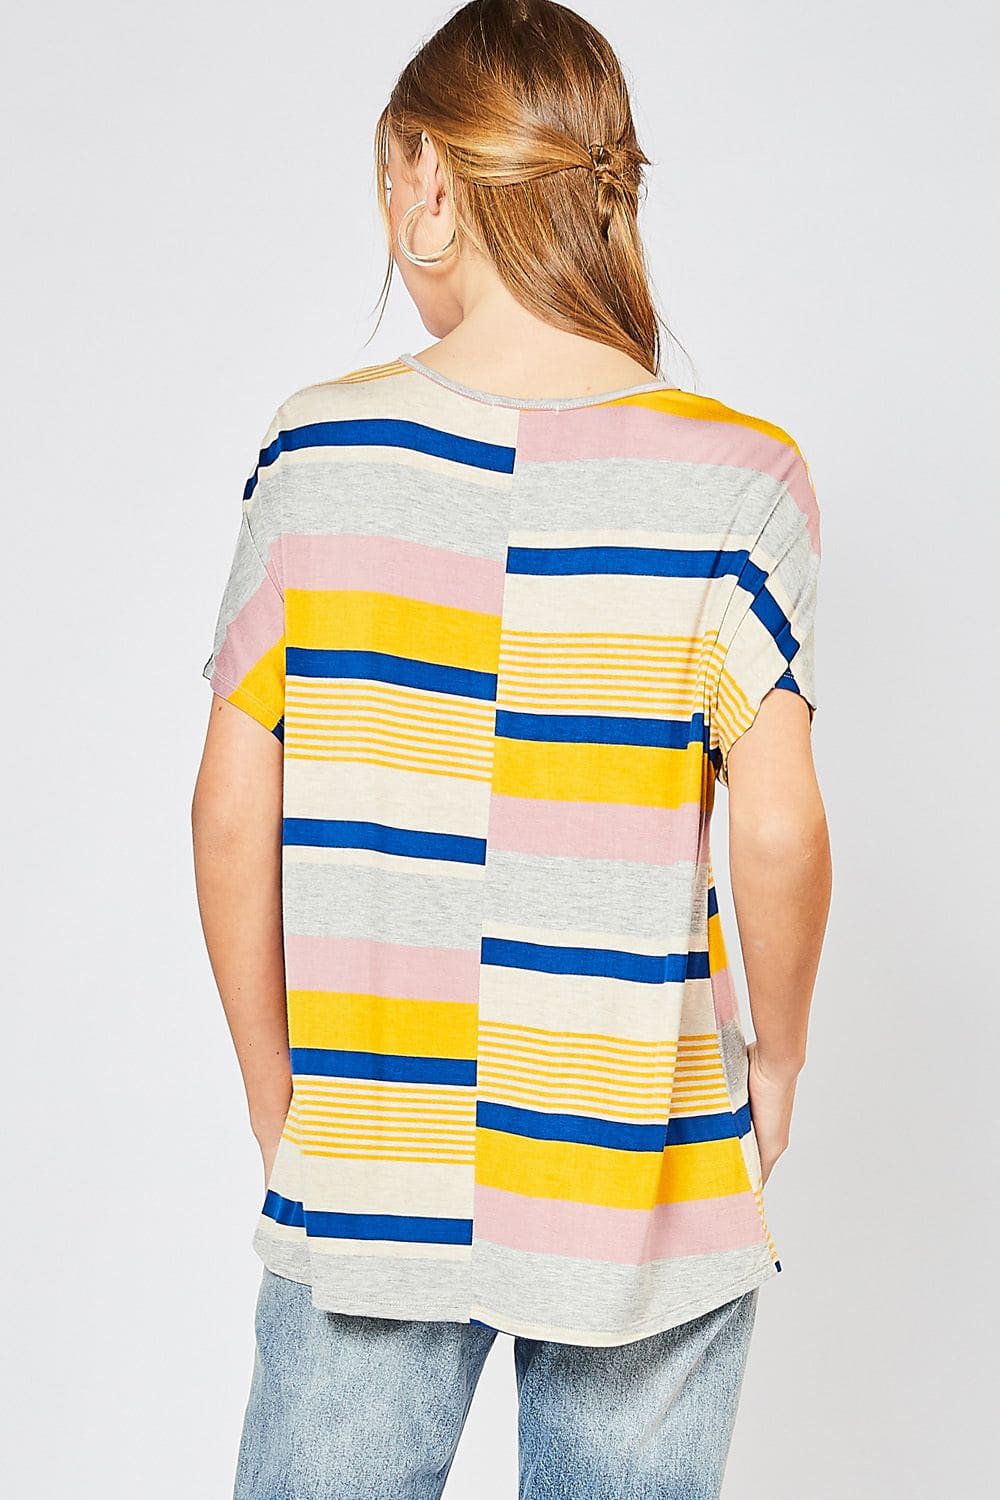 Multi-Color Striped V-Neck Top